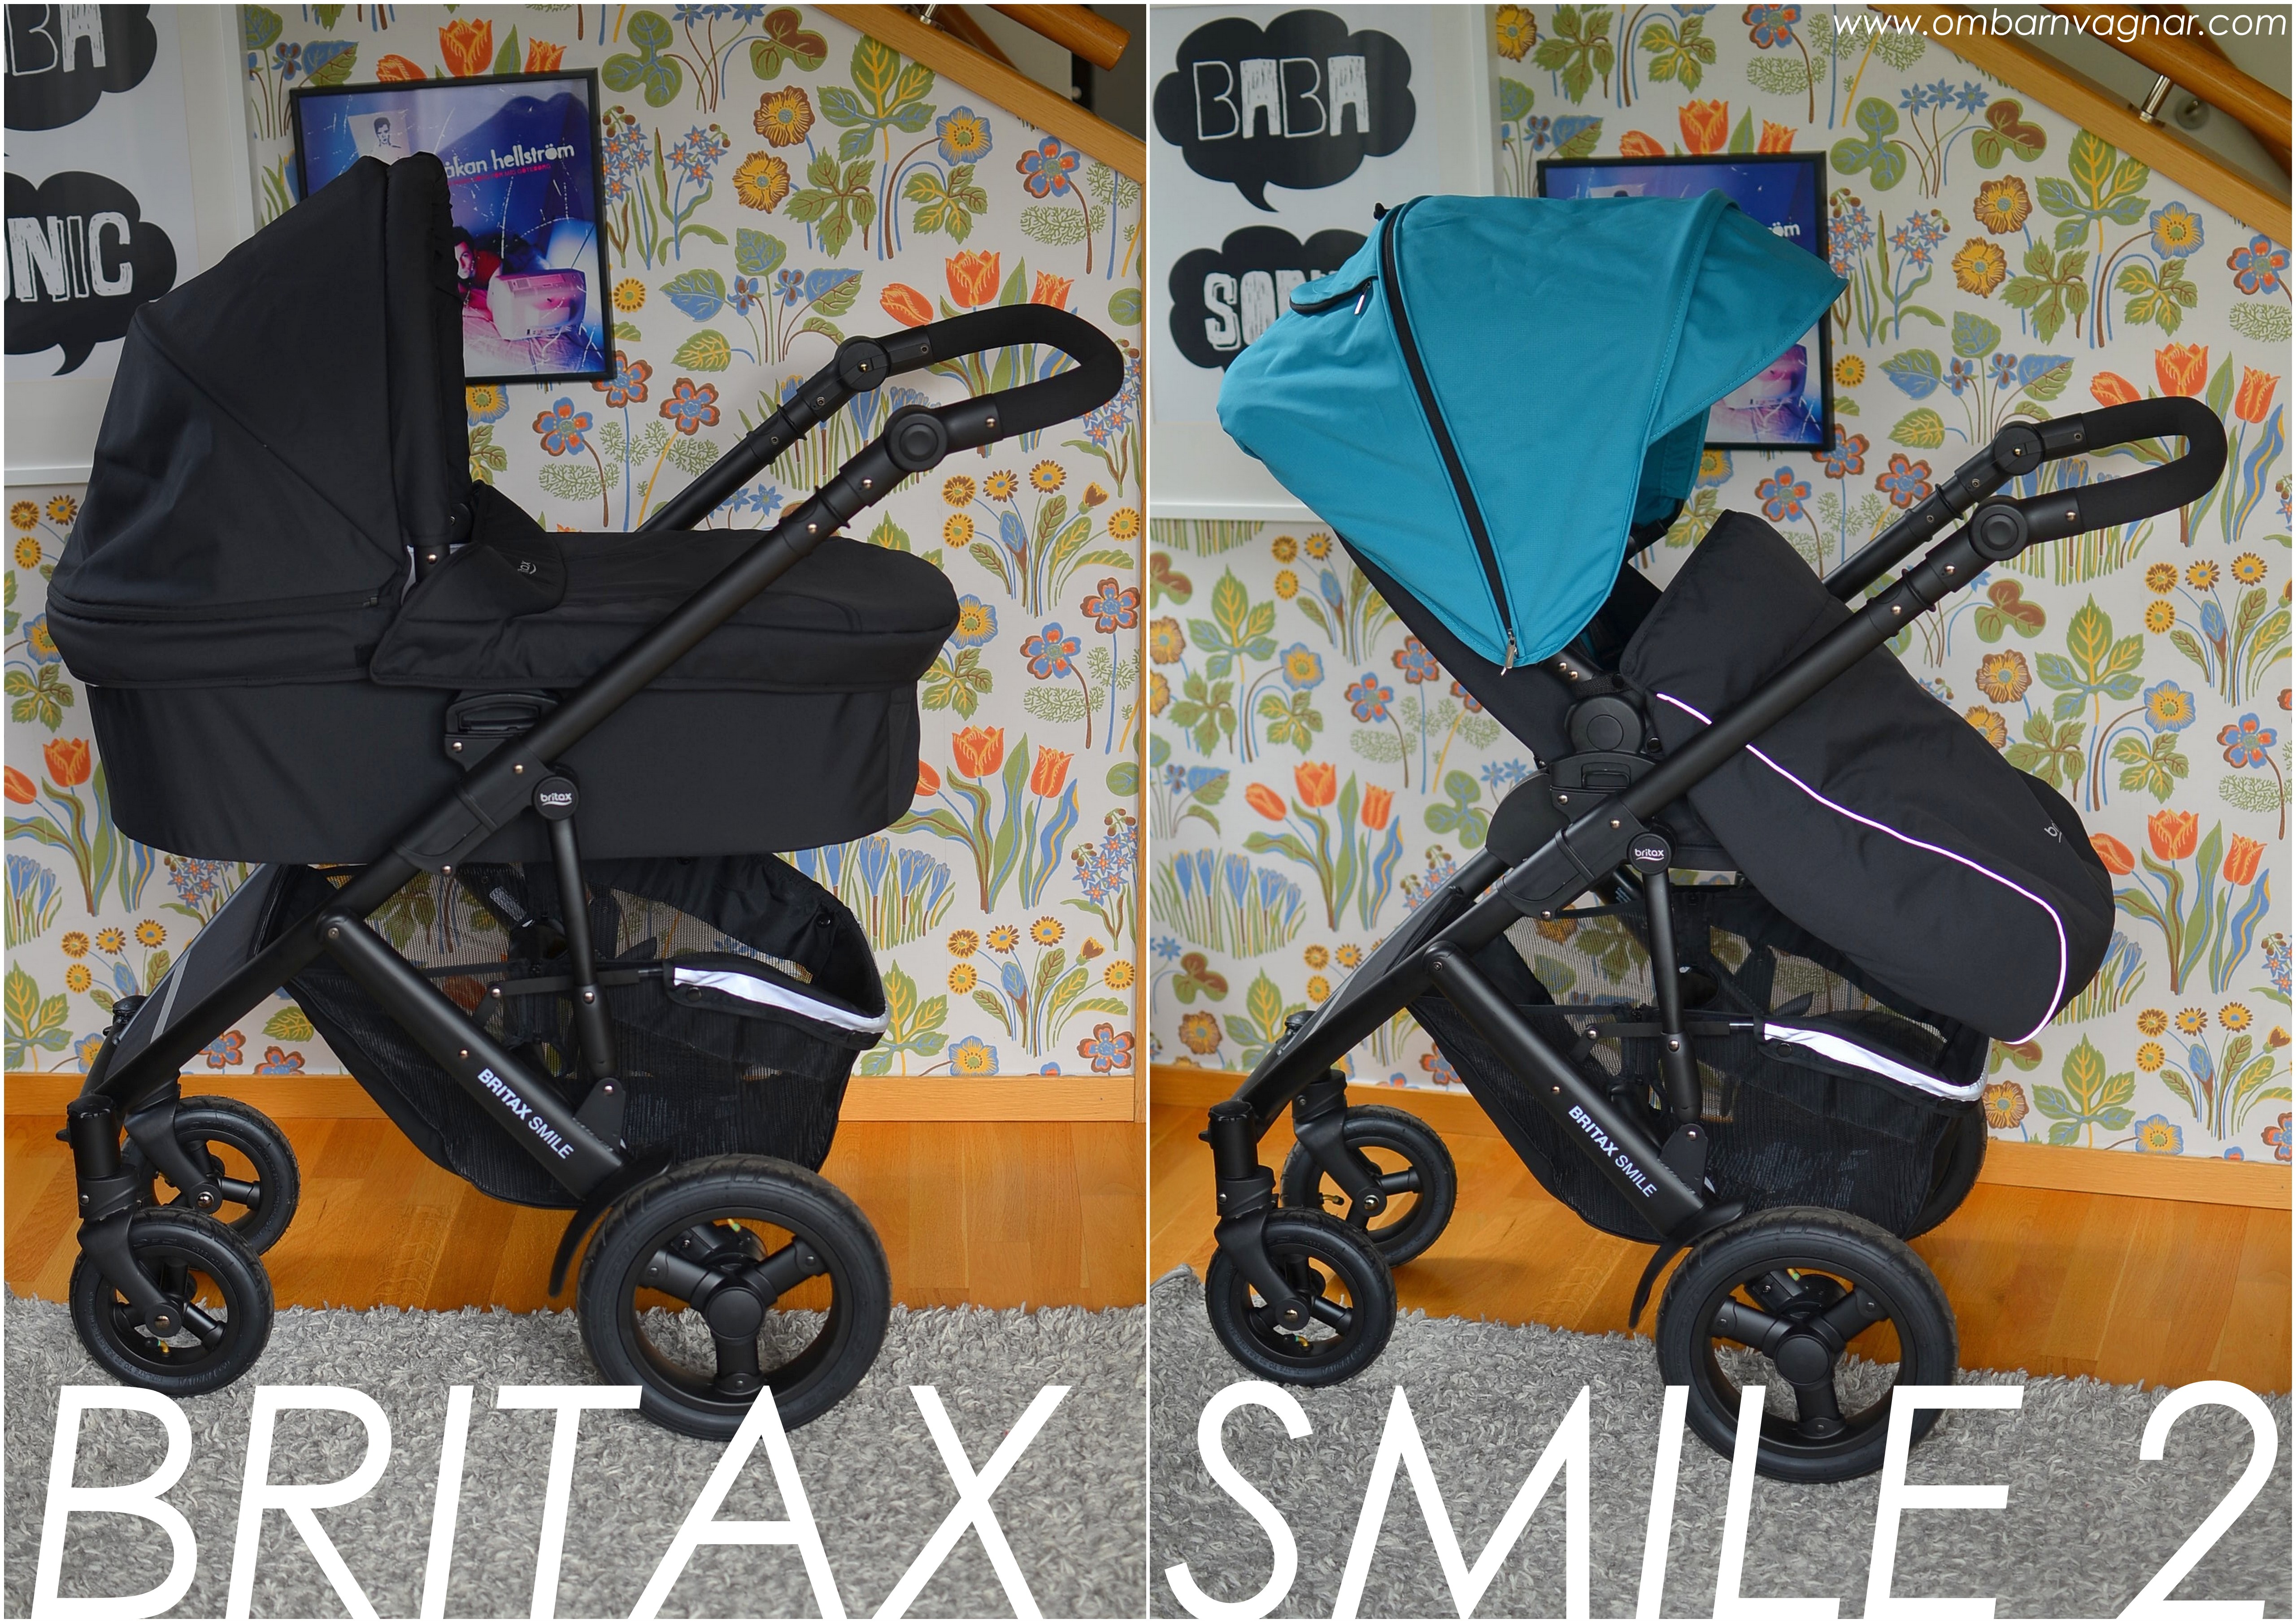 Britax Smile lanserades år 2016.